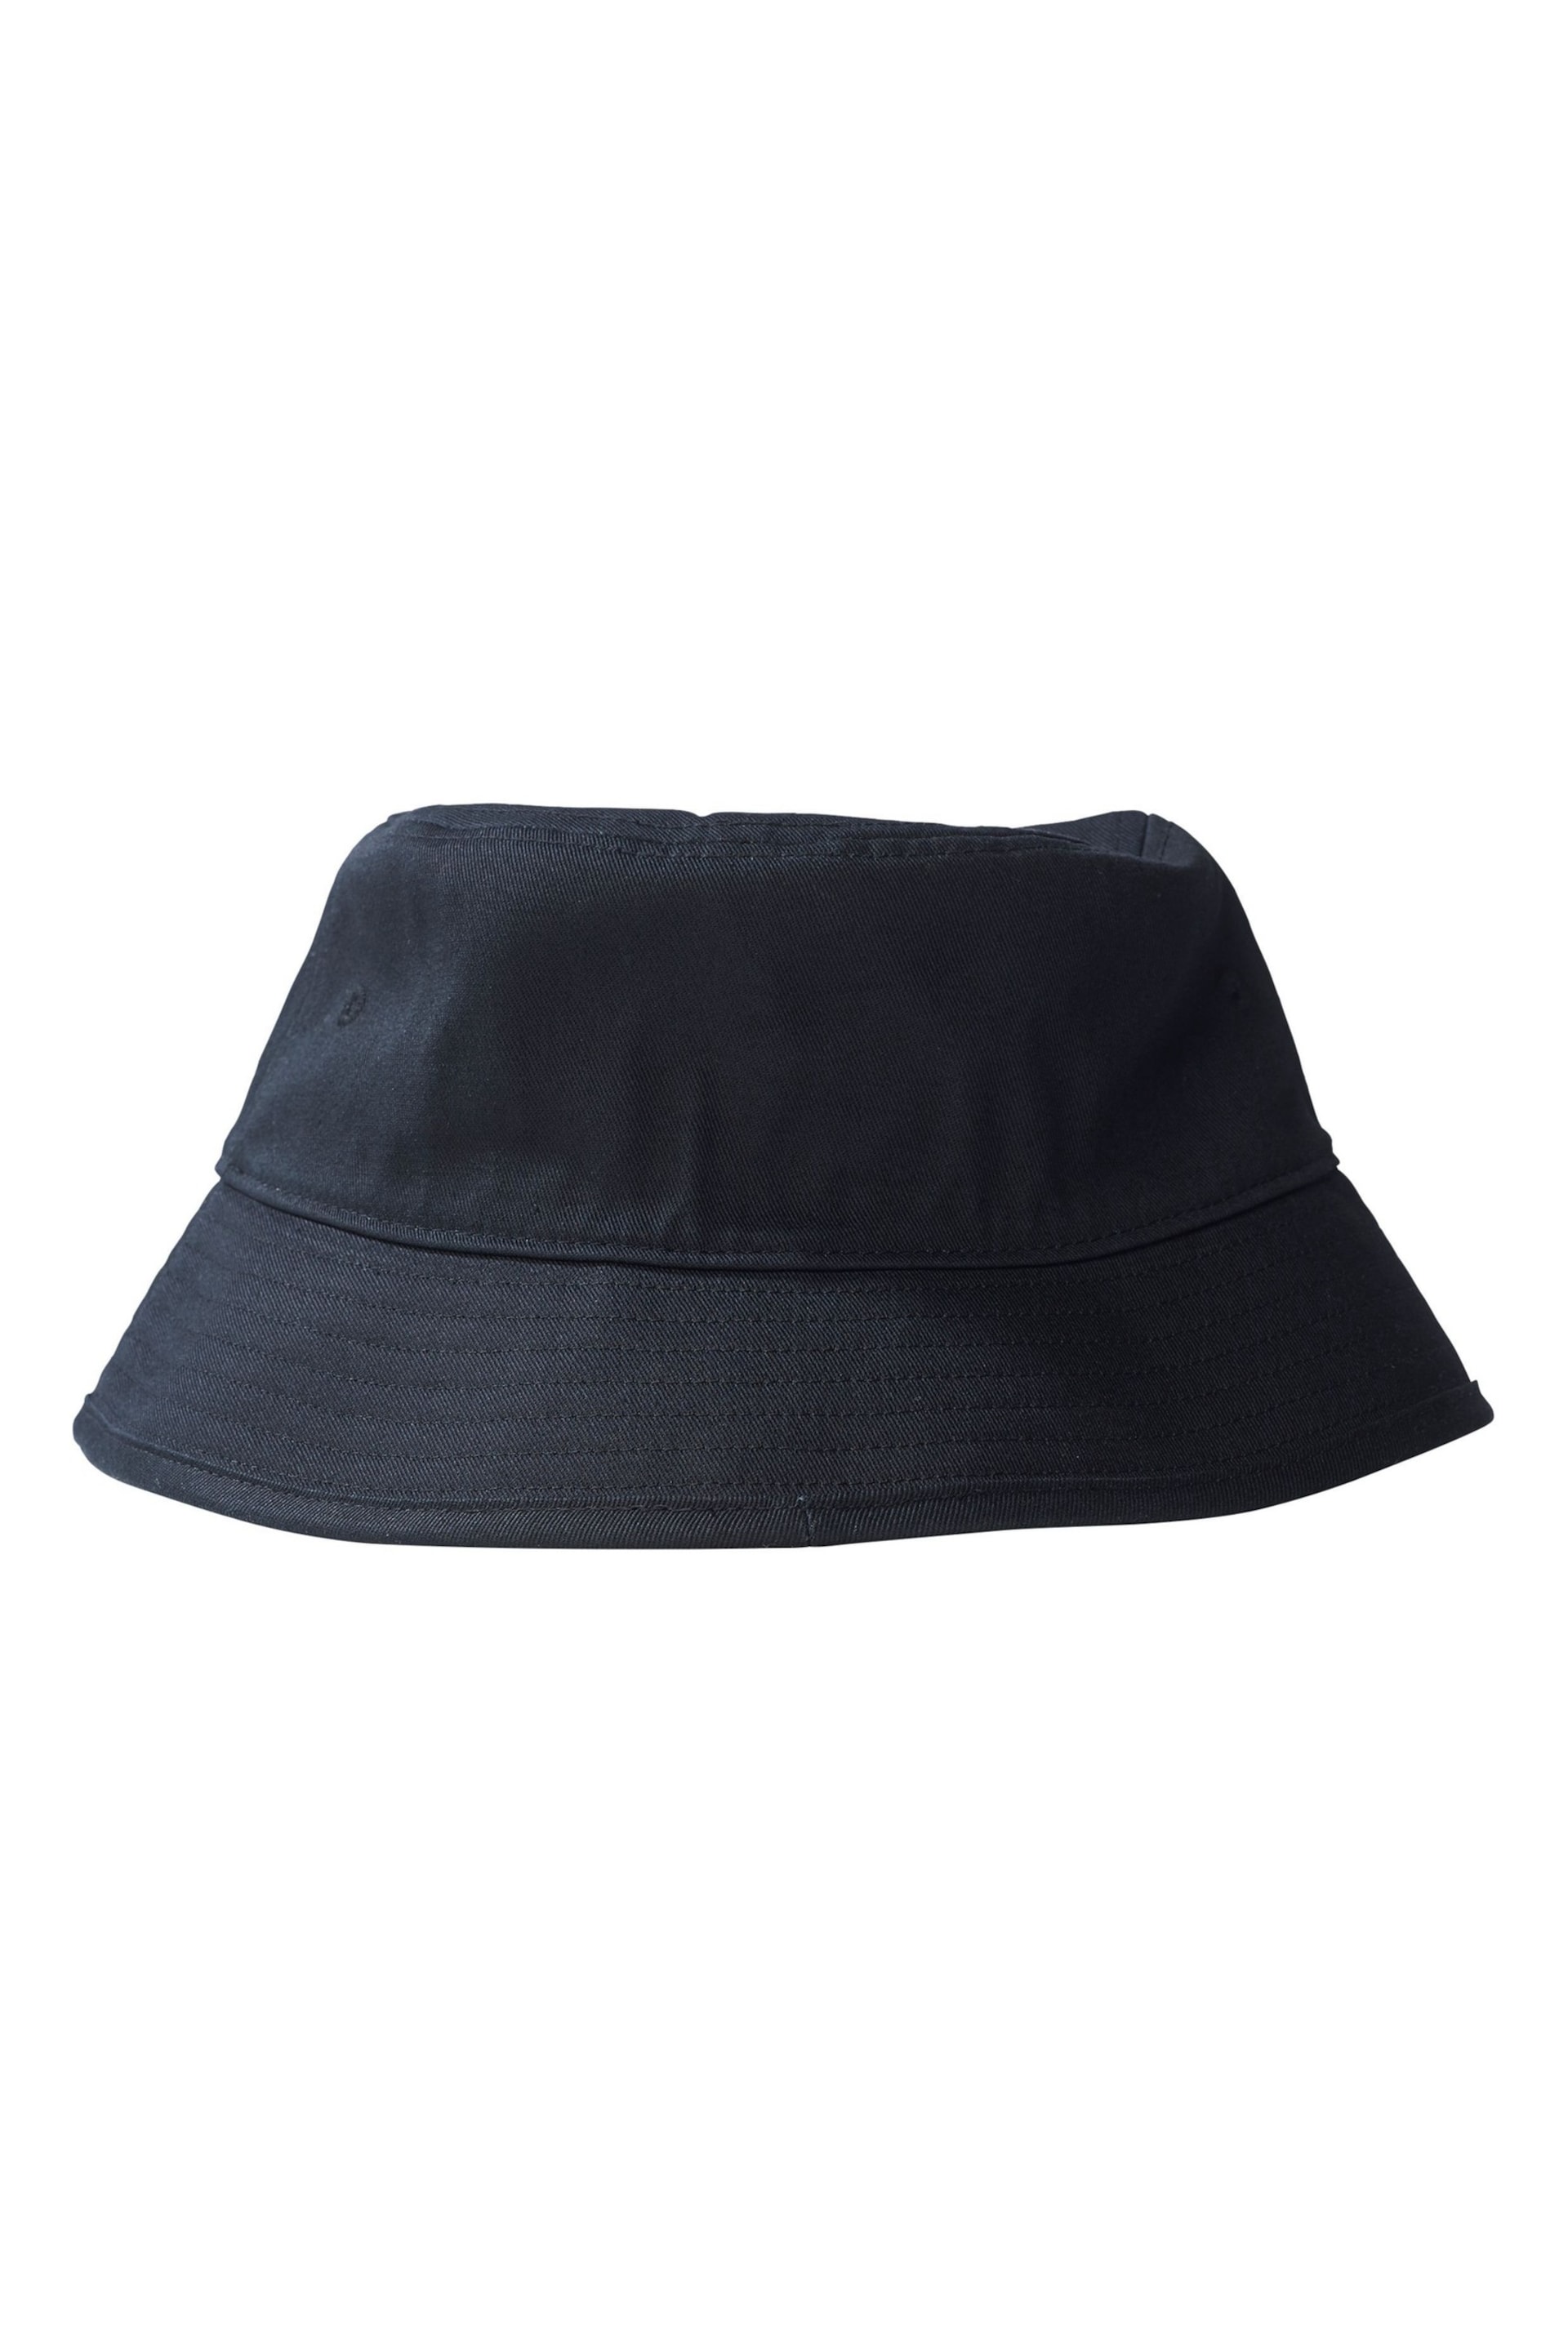 adidas Originals Trefoil Bucket Hat - Image 2 of 7